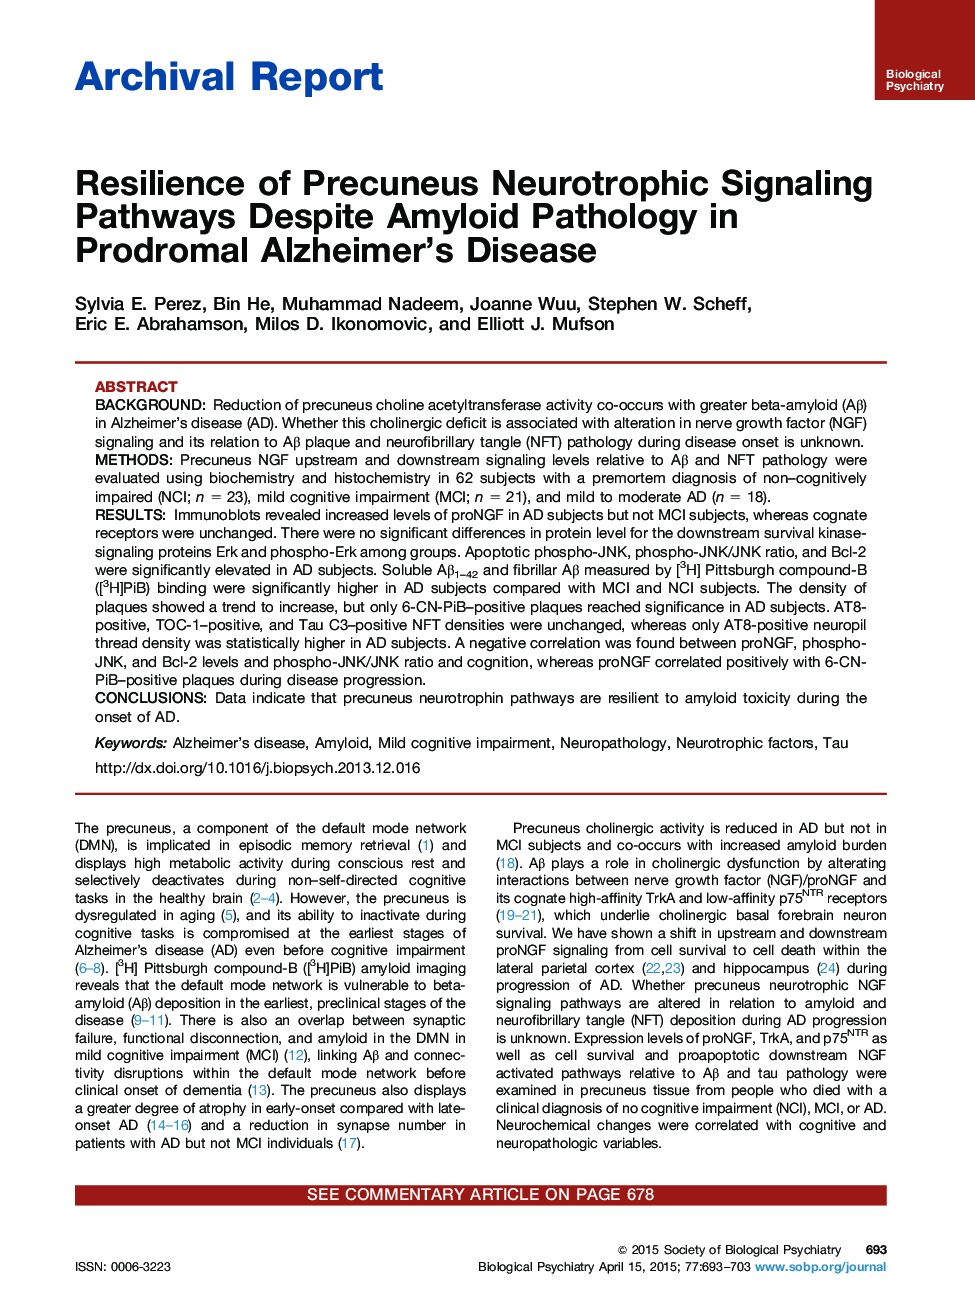 Resilience of Precuneus Neurotrophic Signaling Pathways Despite Amyloid Pathology in Prodromal Alzheimer's Disease